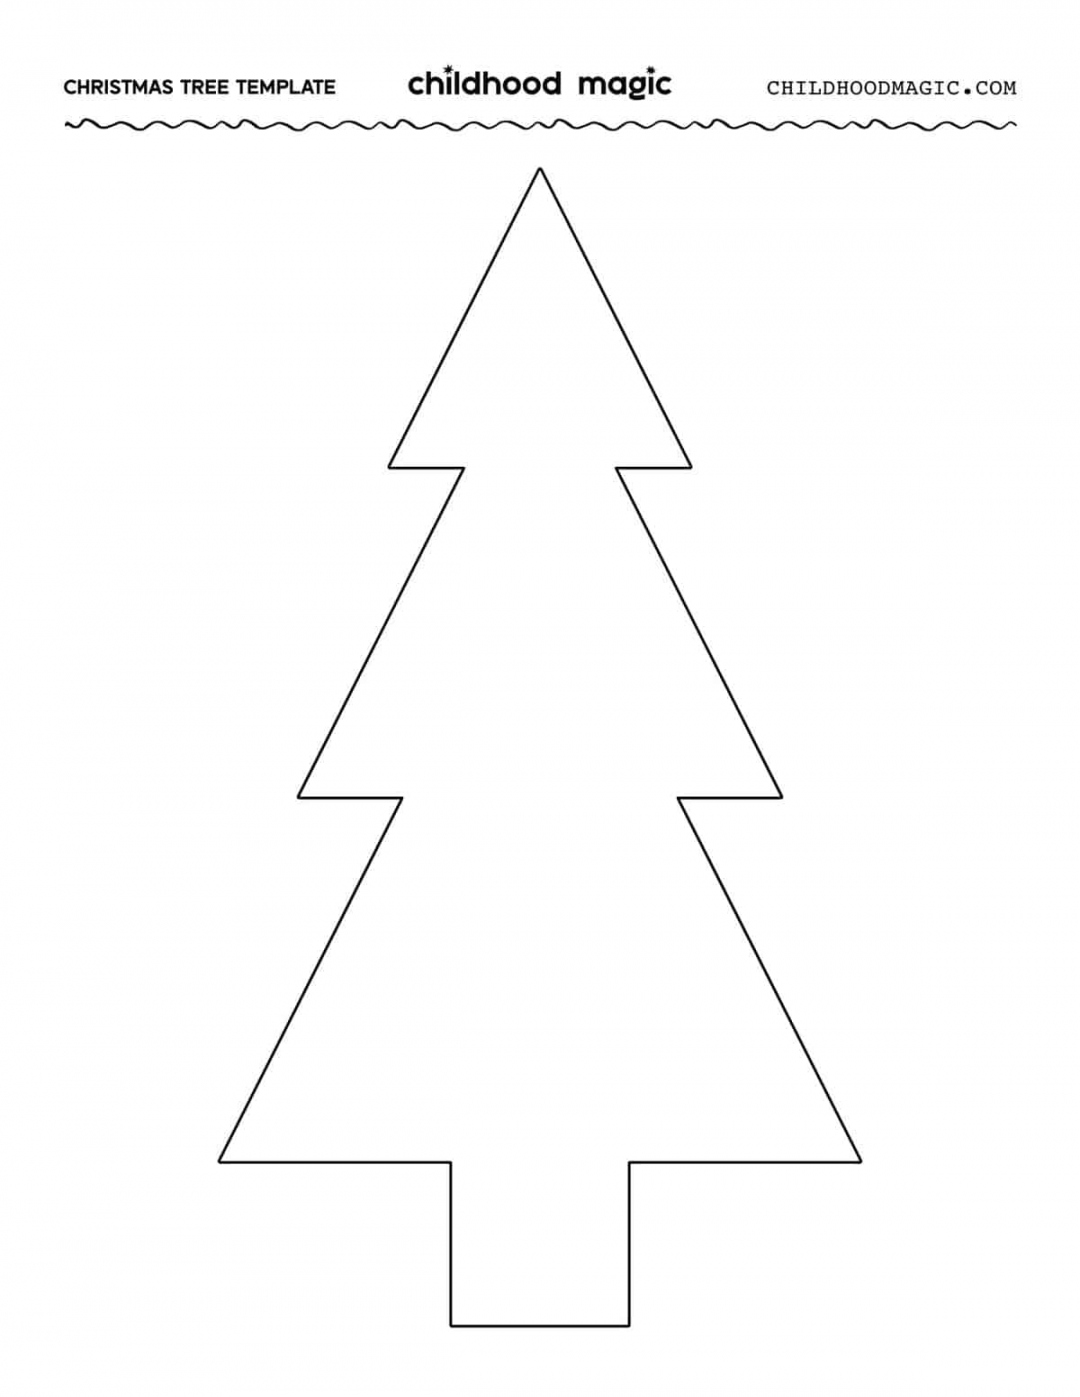 Christmas Tree Template - Free Printables - Childhood Magic - FREE Printables - Free Christmas Tree Template